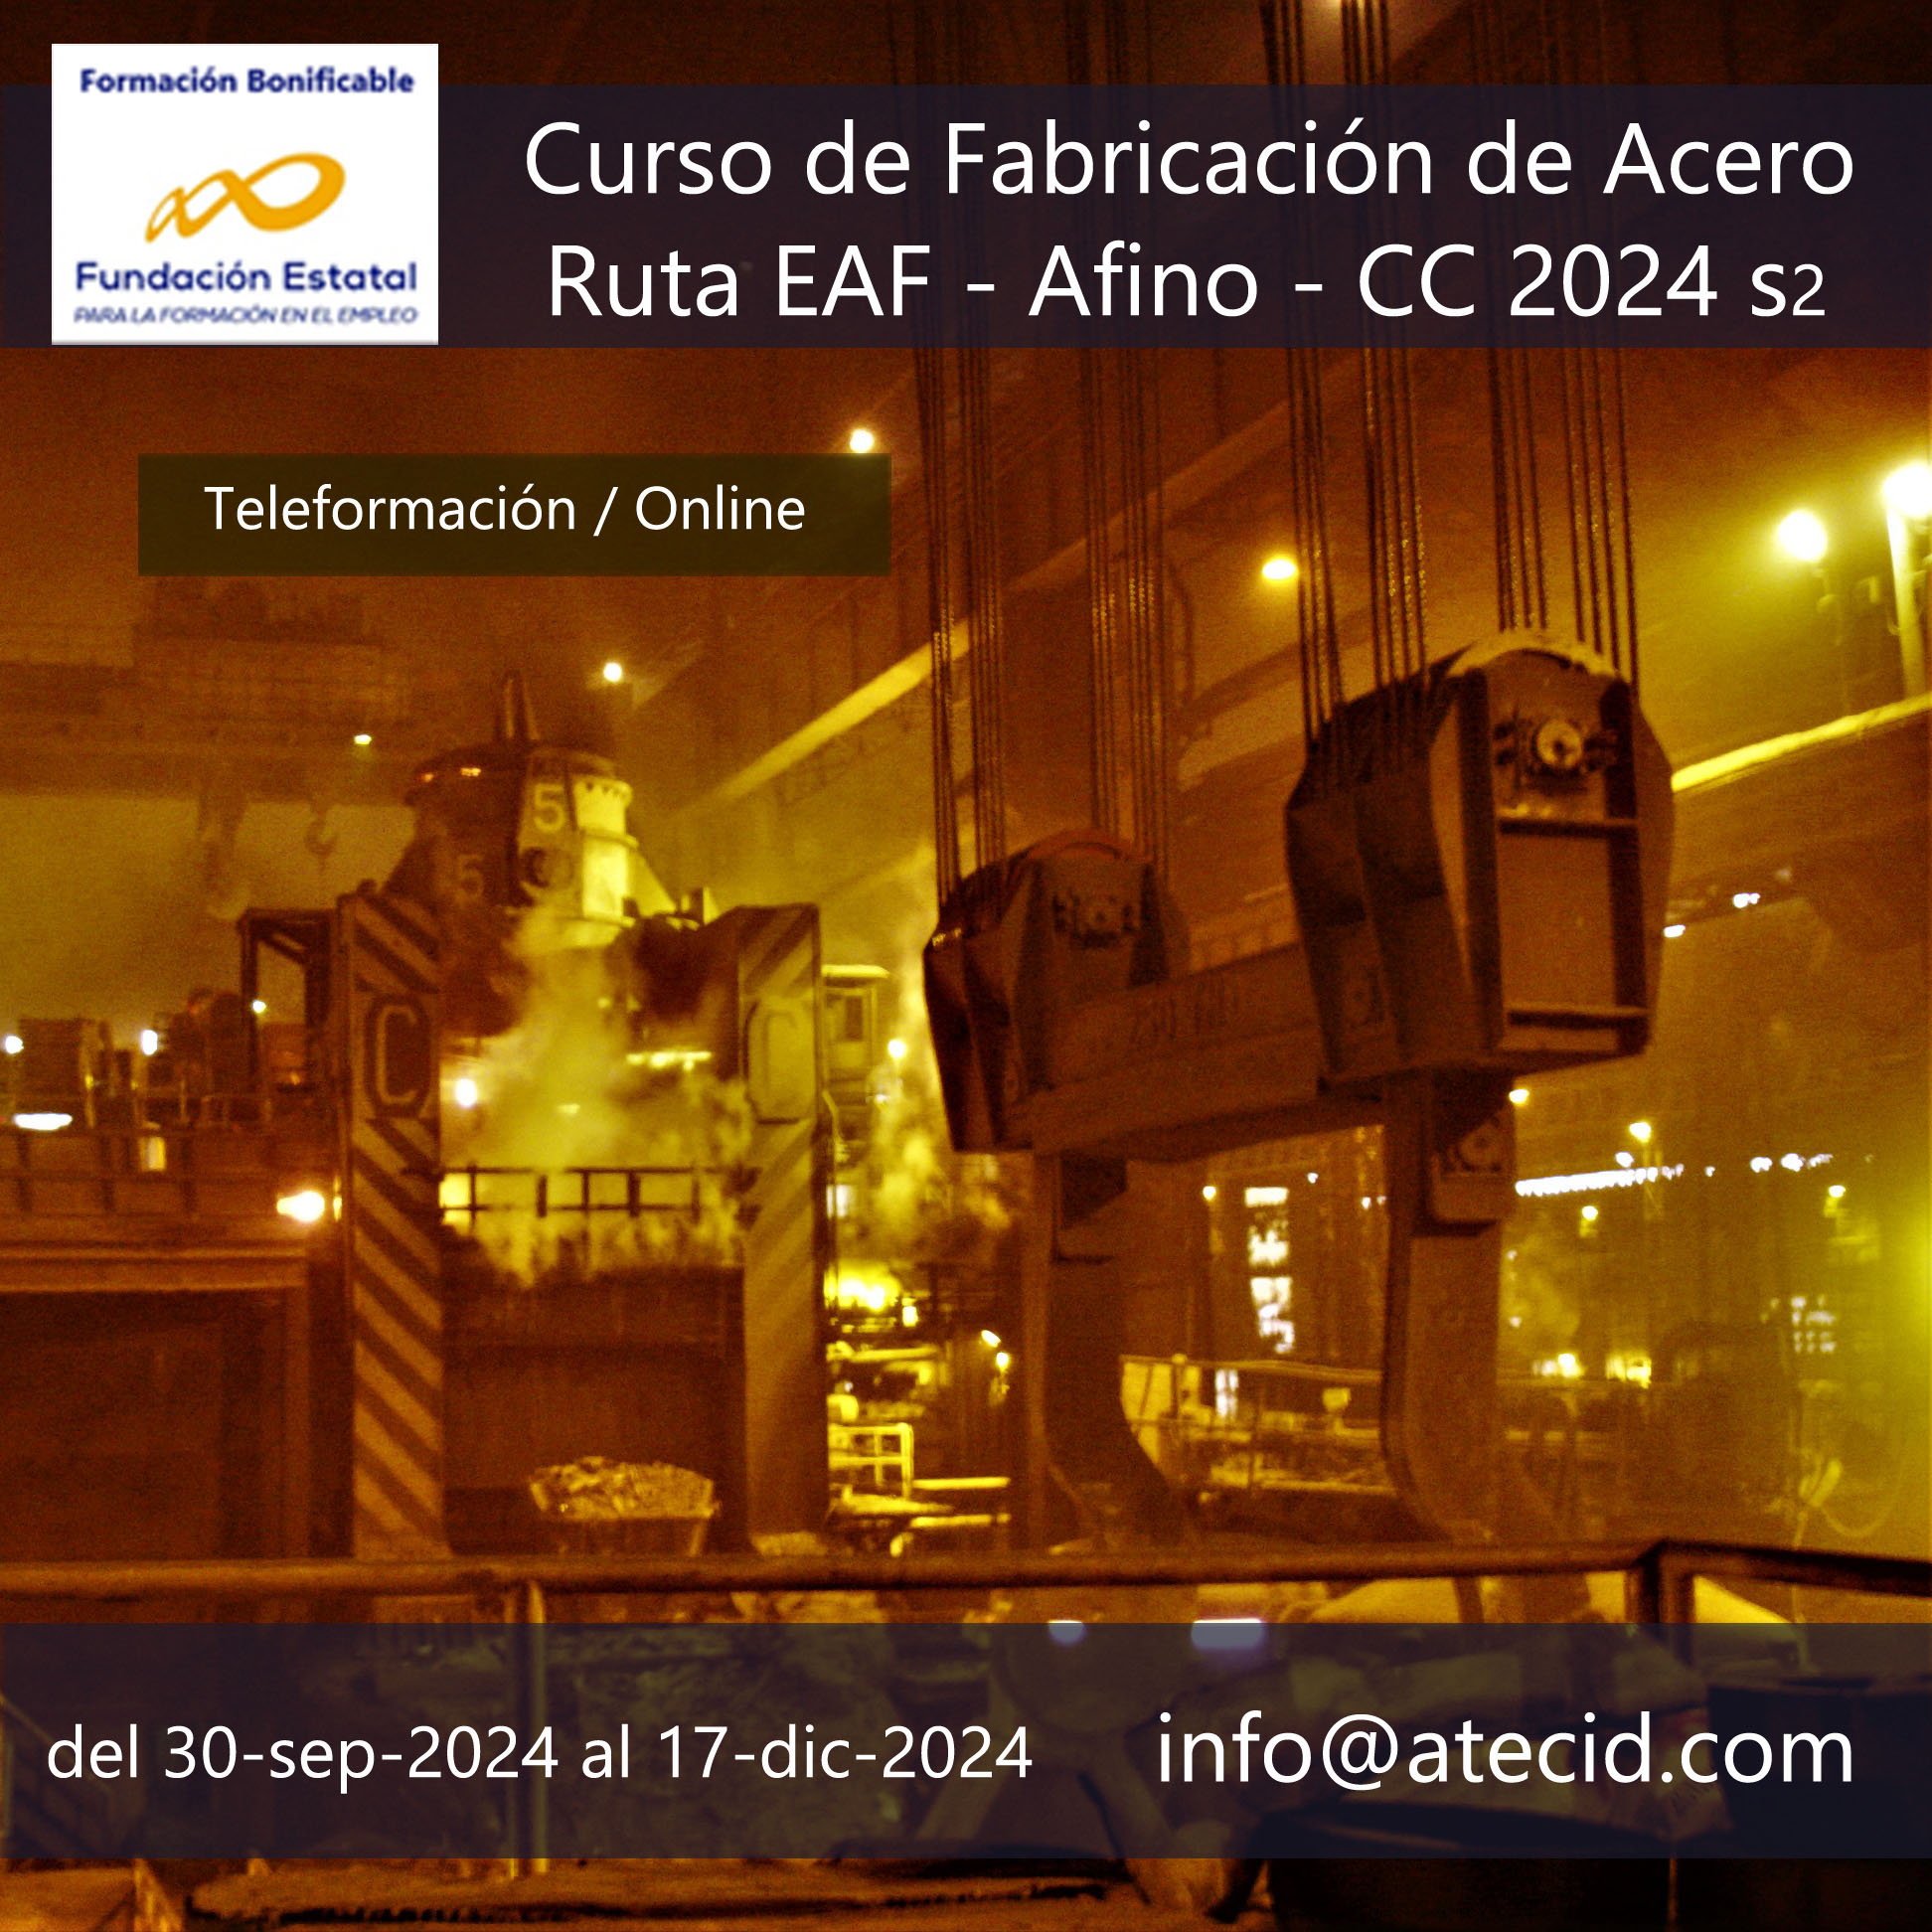 Curso de Fabricacion de acero por la ruta EAF-Afino-CC 2024 S2